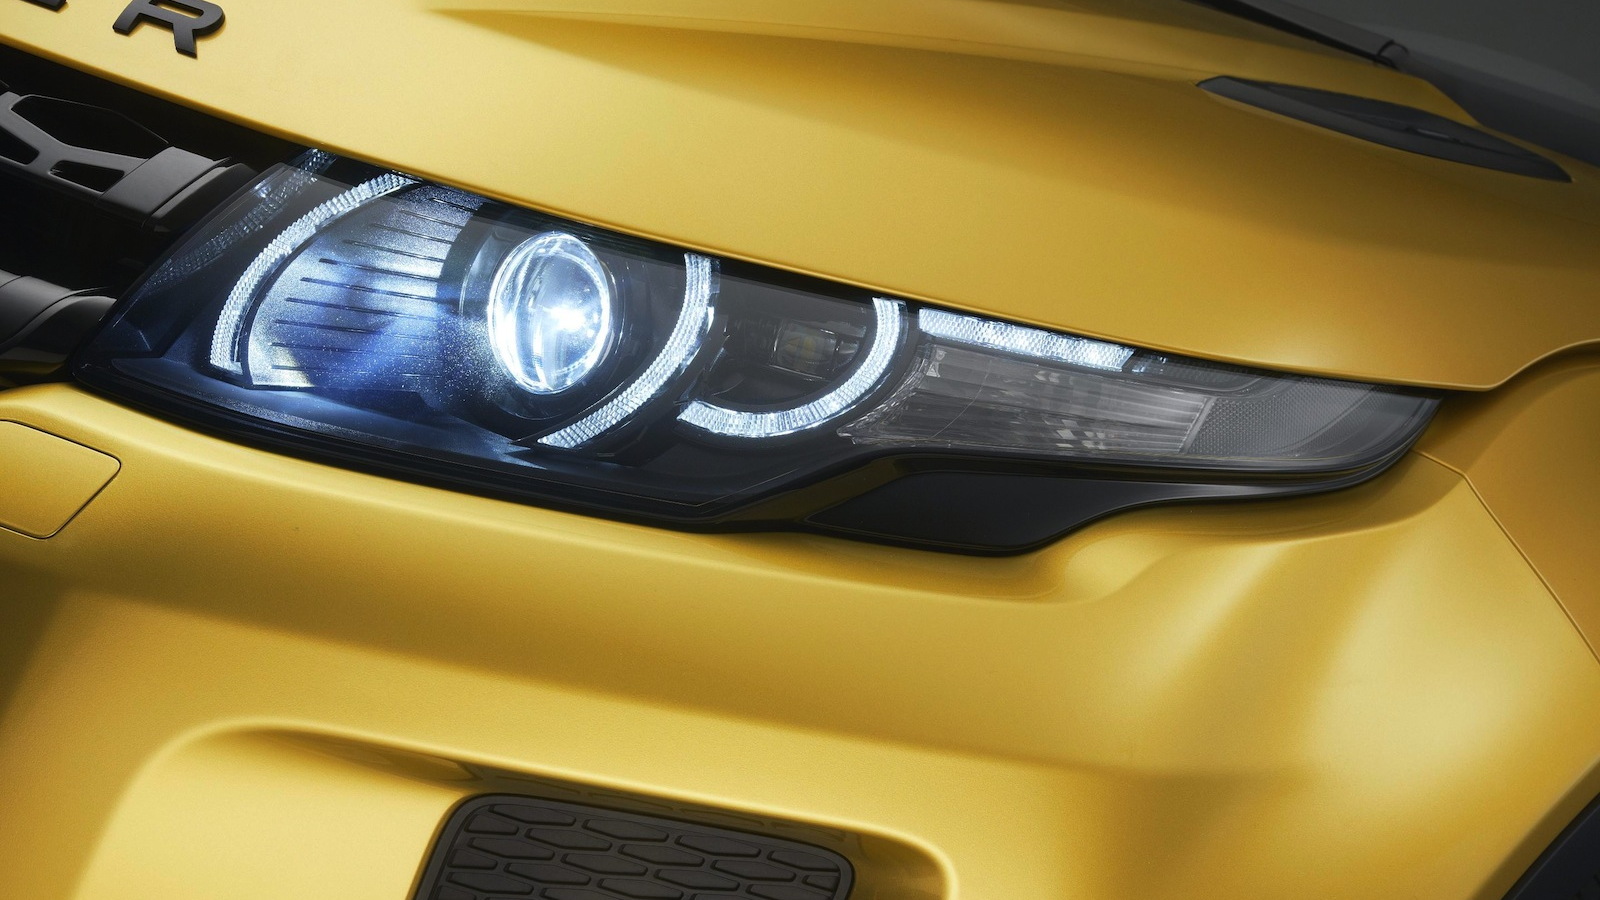 Sicilian Yellow Limited Edition 2013 Range Rover Evoque